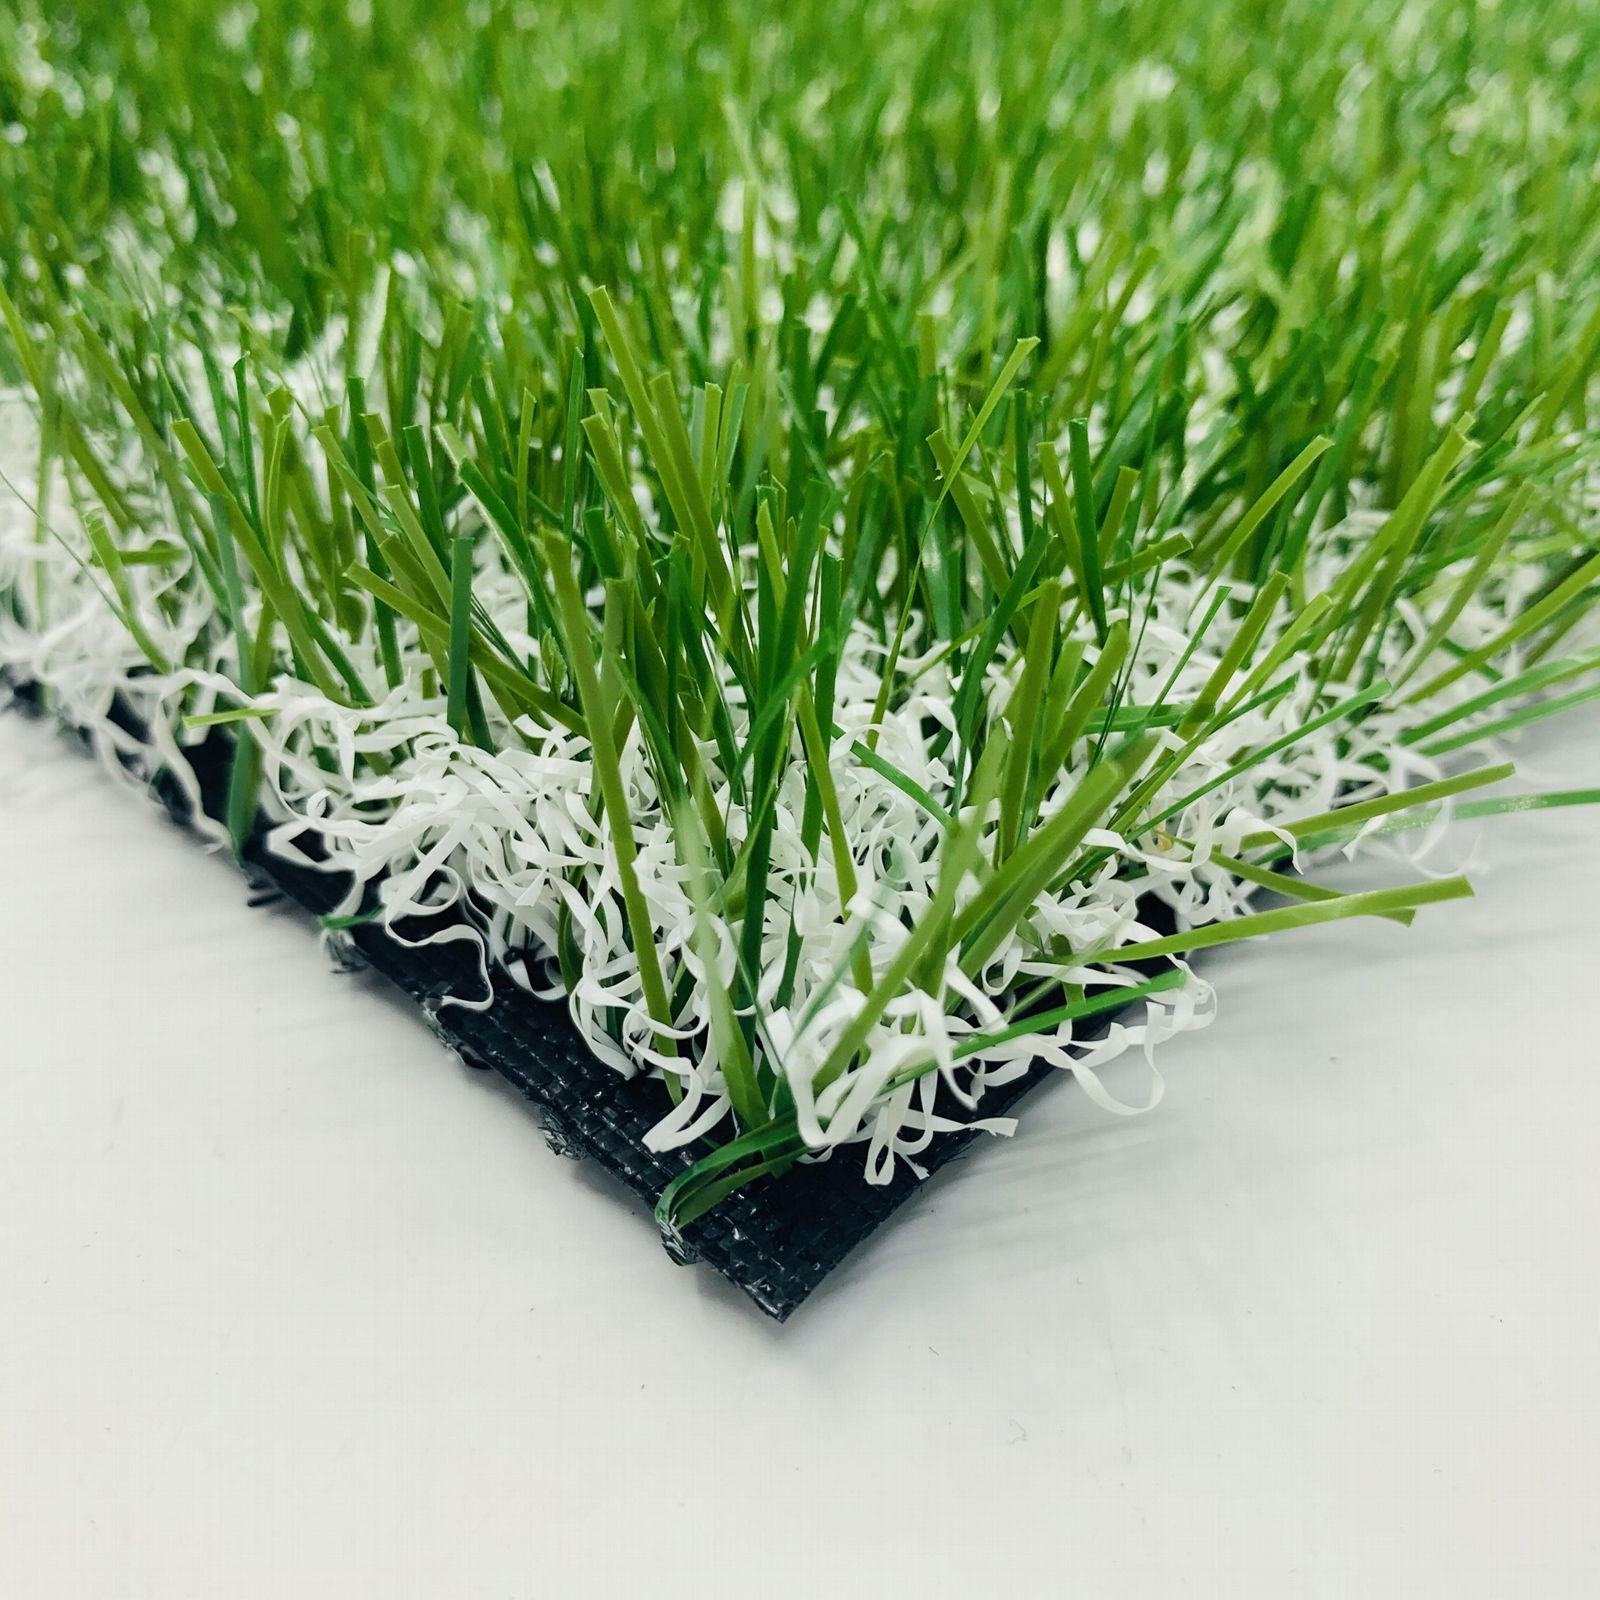 DIY Snow Artificial Grass 2